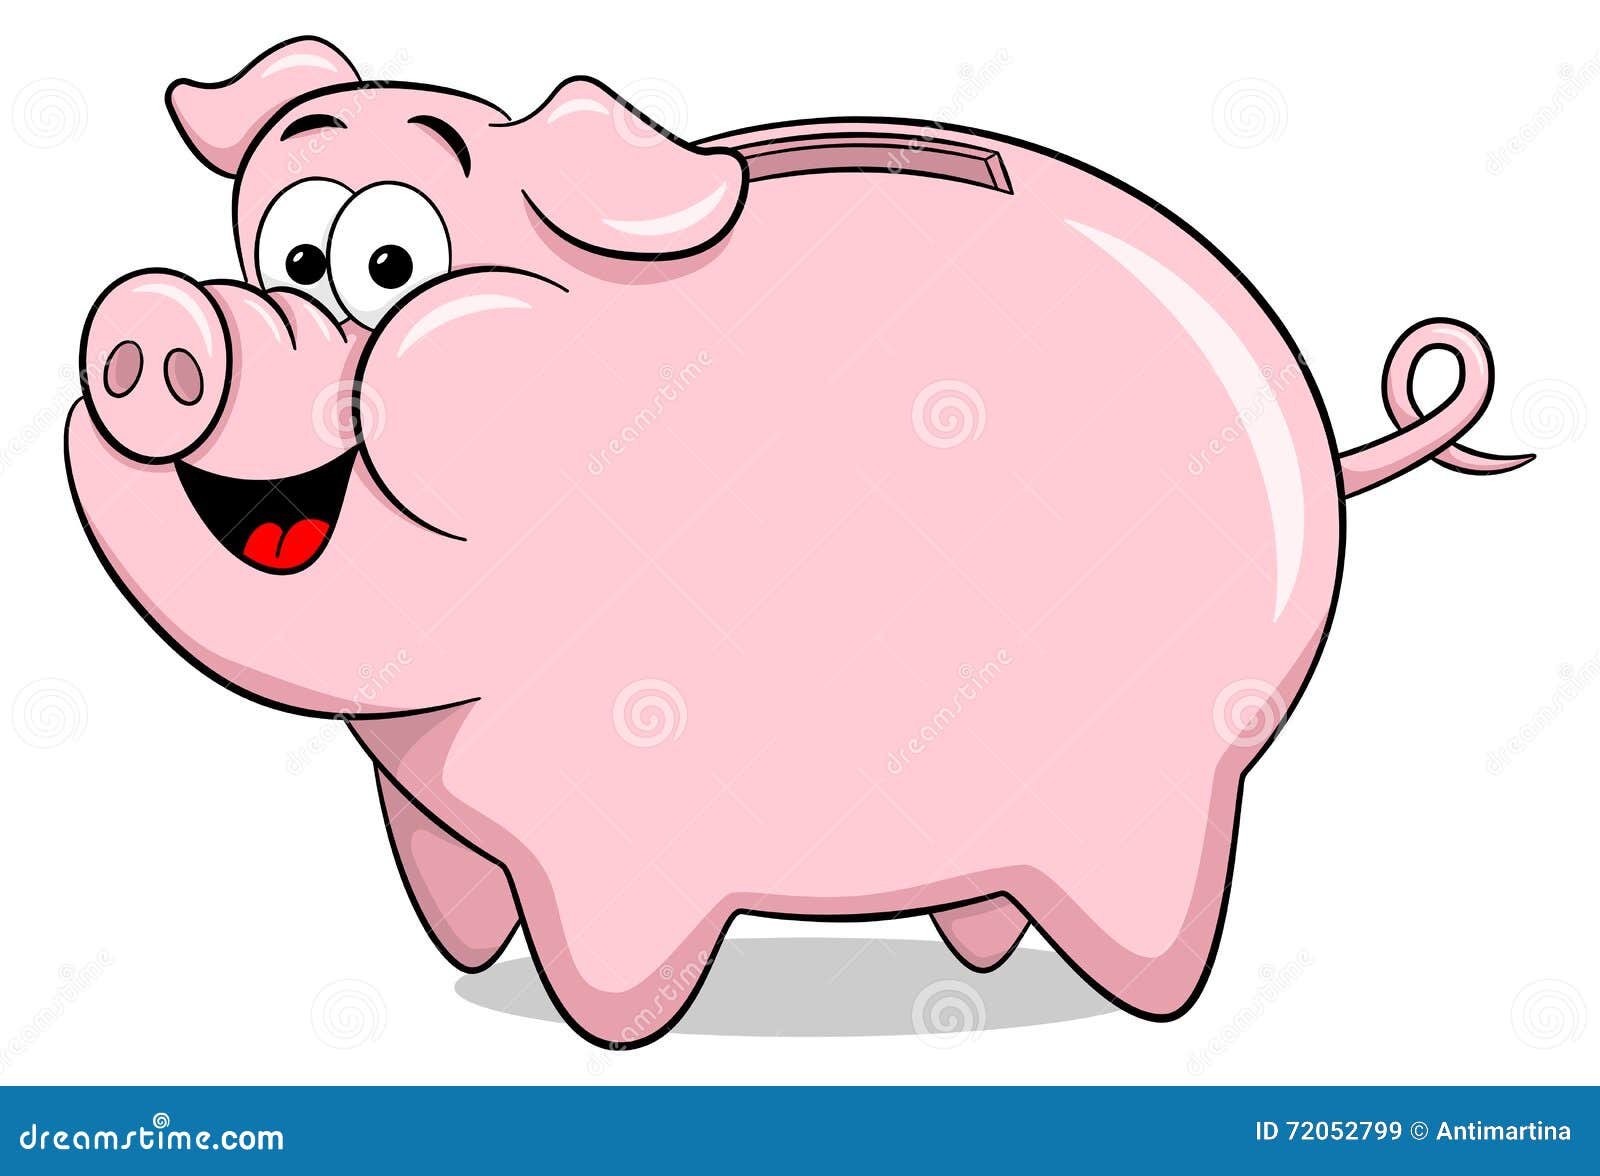 Cartoon Piggy Bank Stock Vector - Image: 72052799